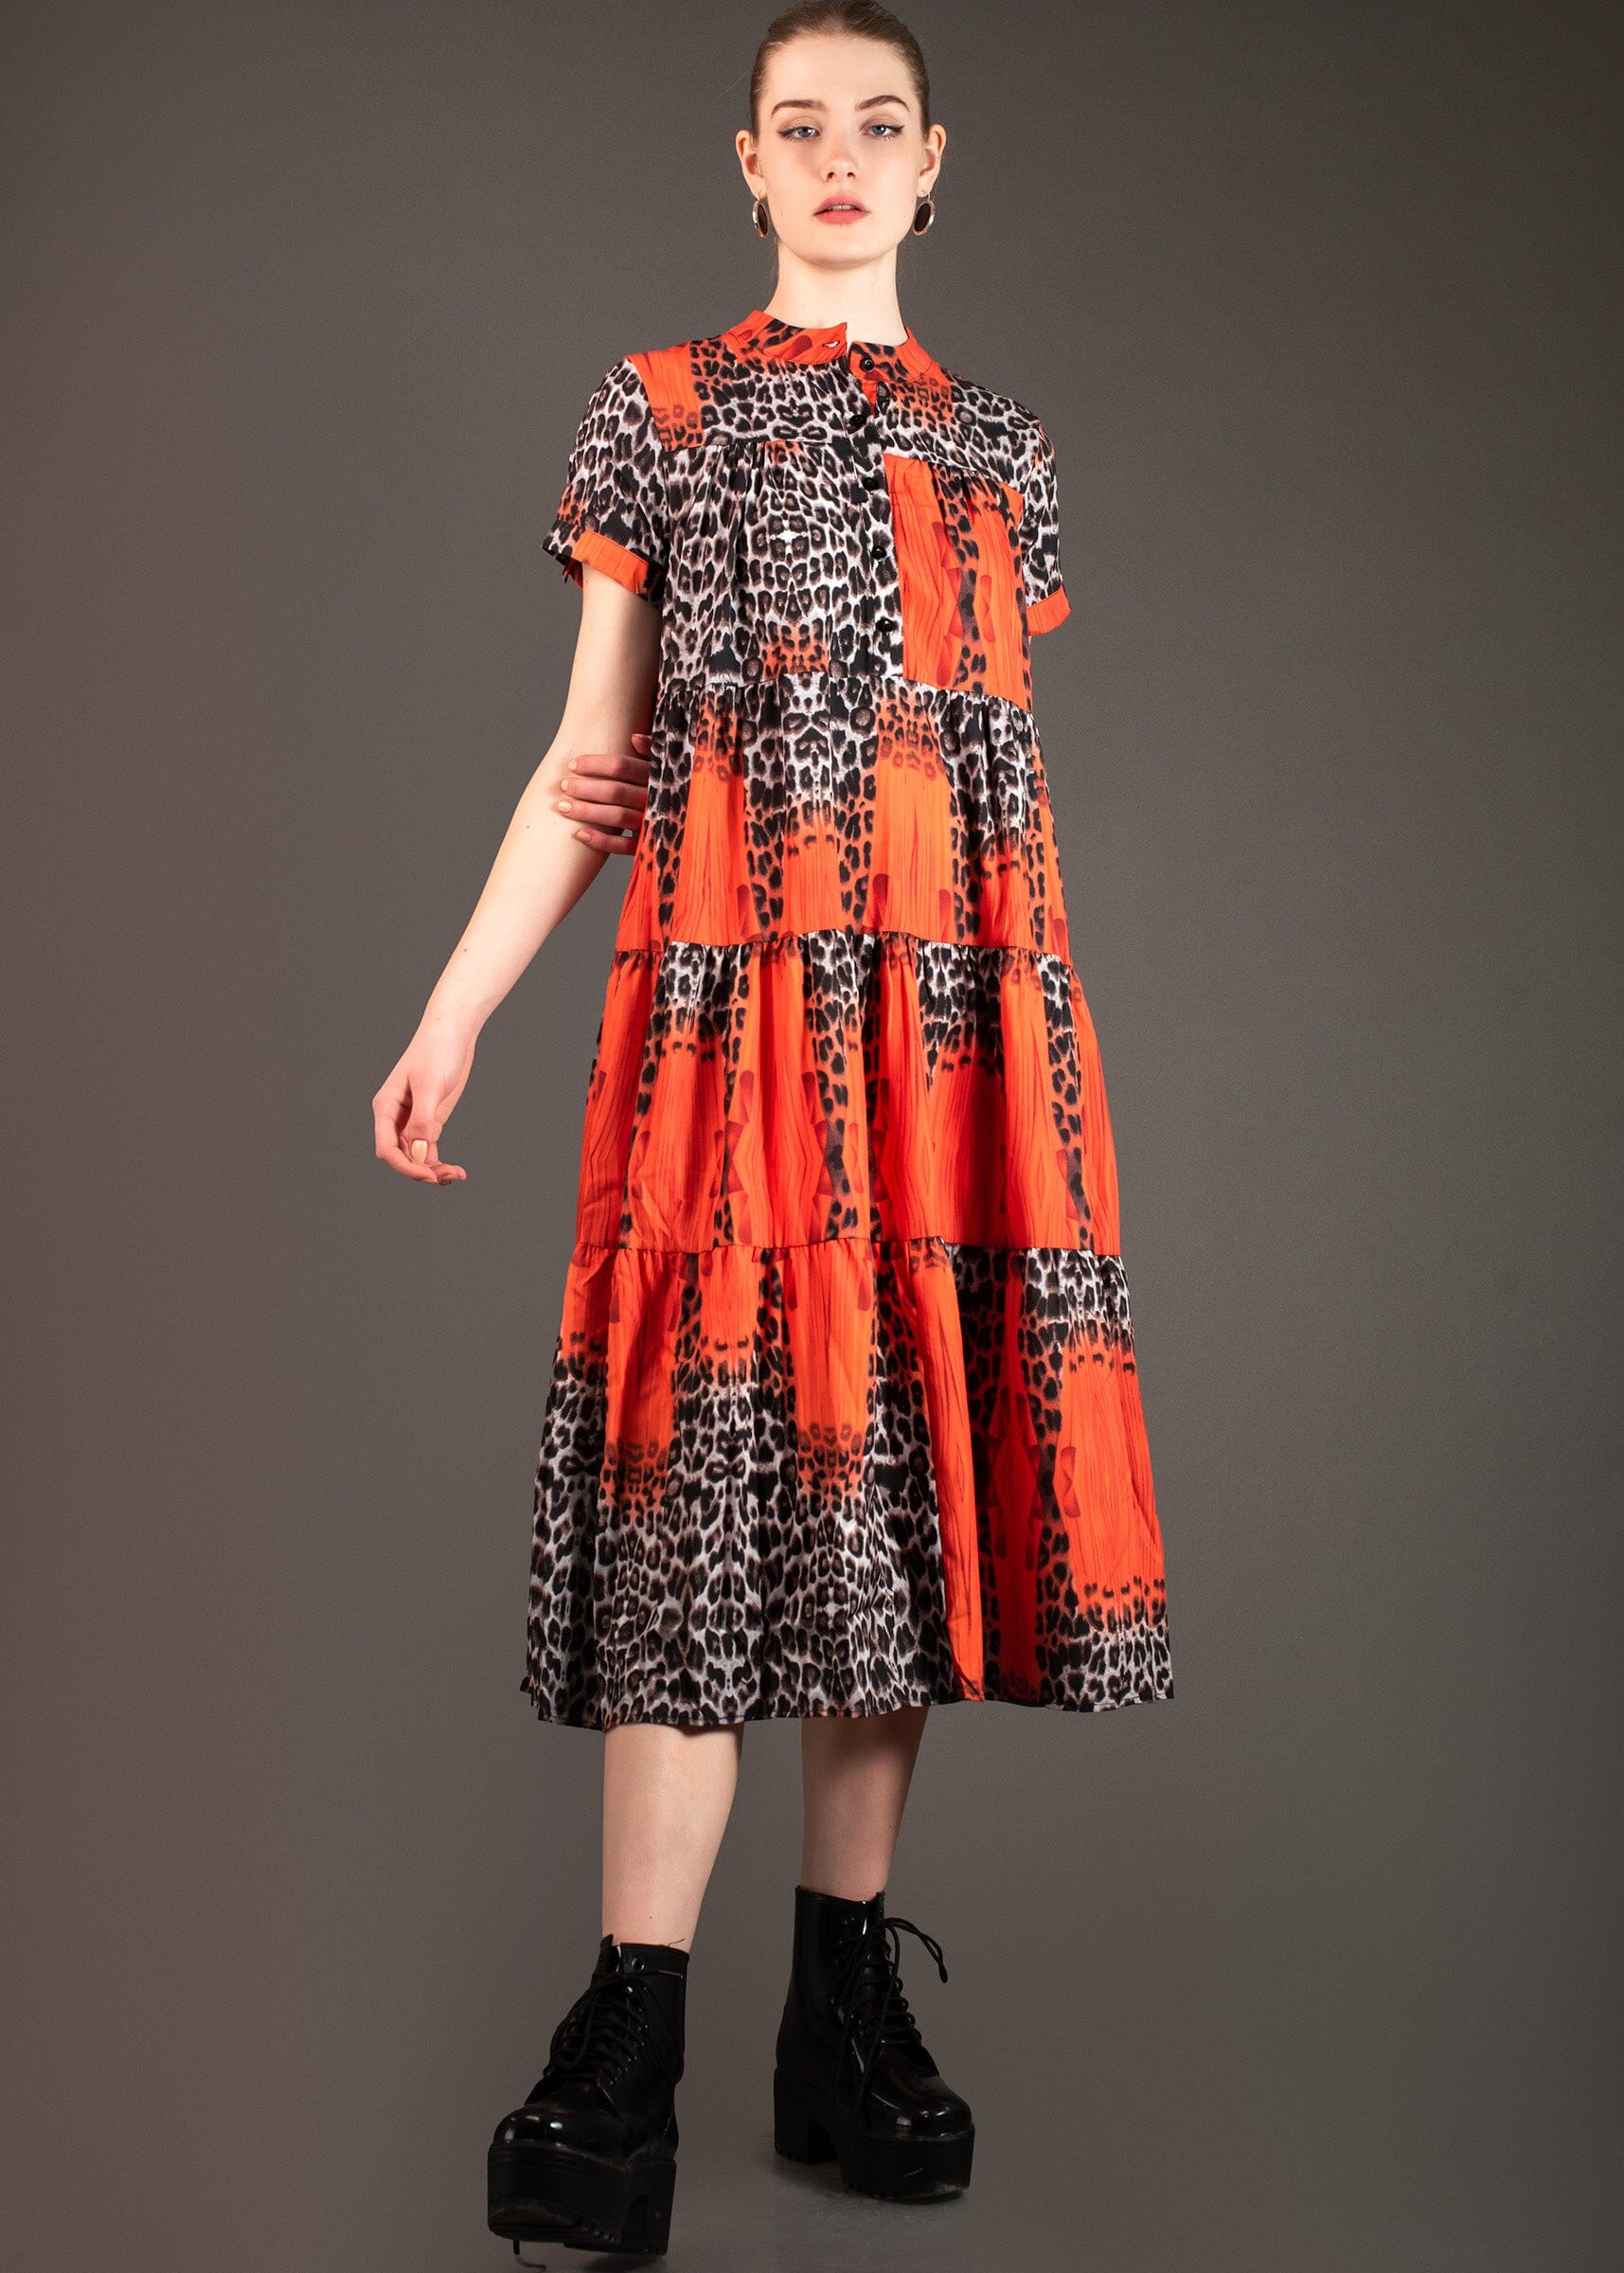 Abstract Animal Print Dress Dresses Kate Hewko 